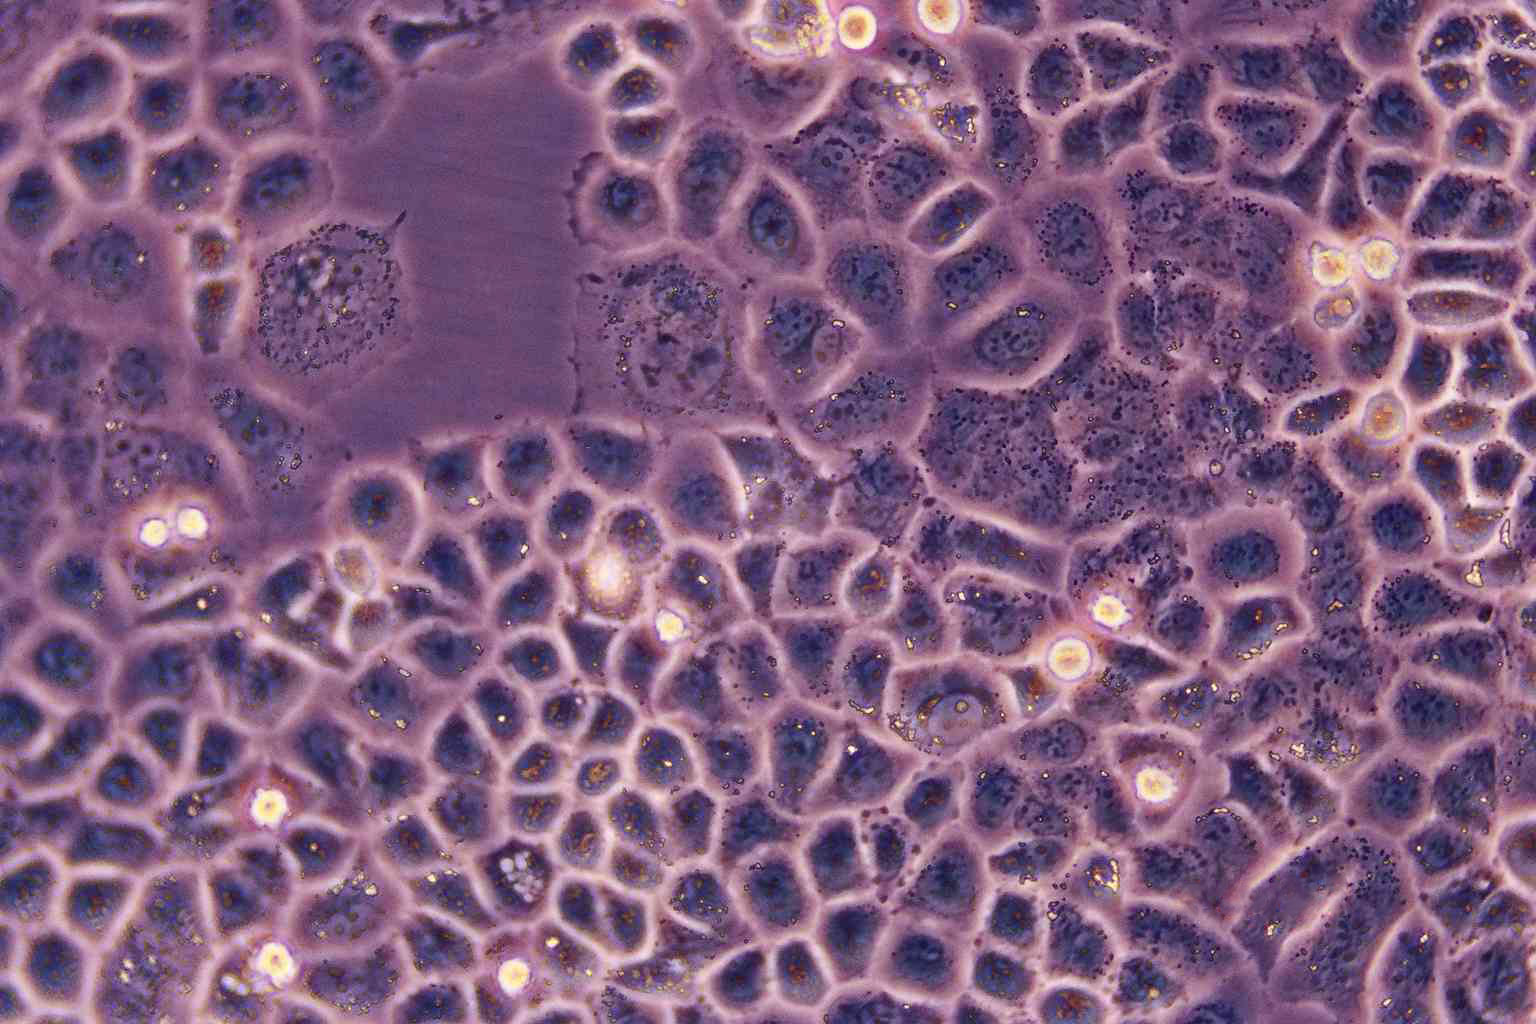 NCI-H520:人肺腺鳞癌复苏细胞(提供STR鉴定图谱),NCI-H520